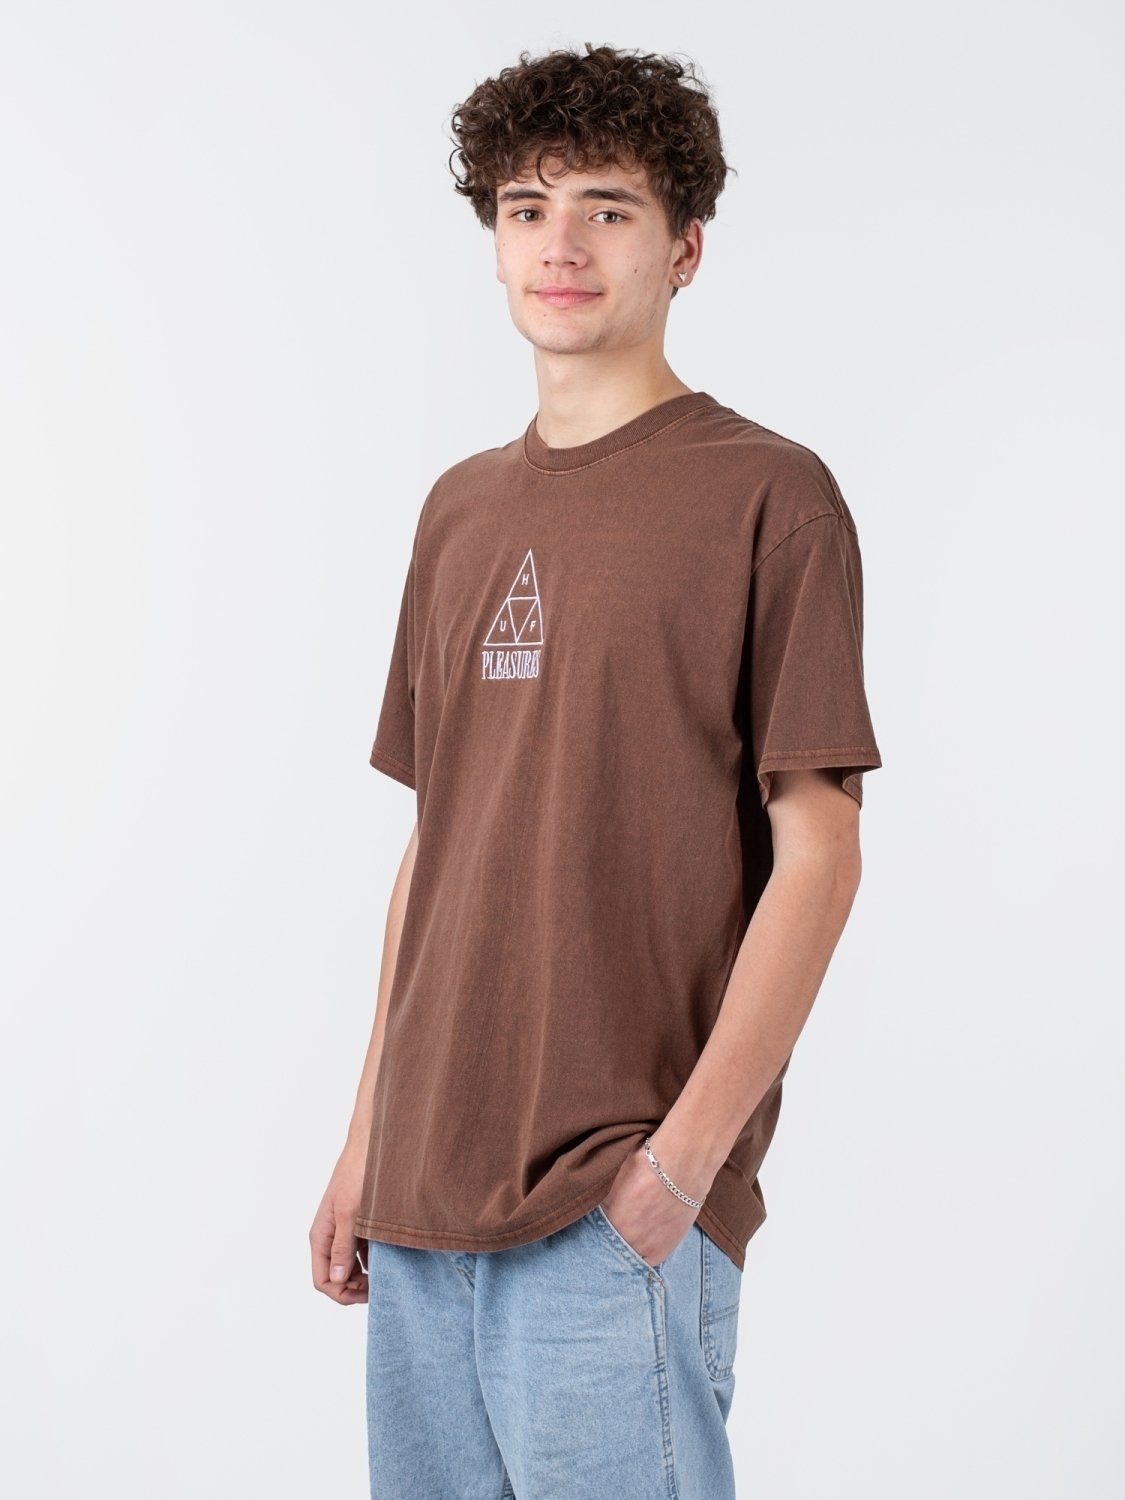 Tee HUF HUF x Short T-Shirt Pleasures Brown Sleeve Dyed